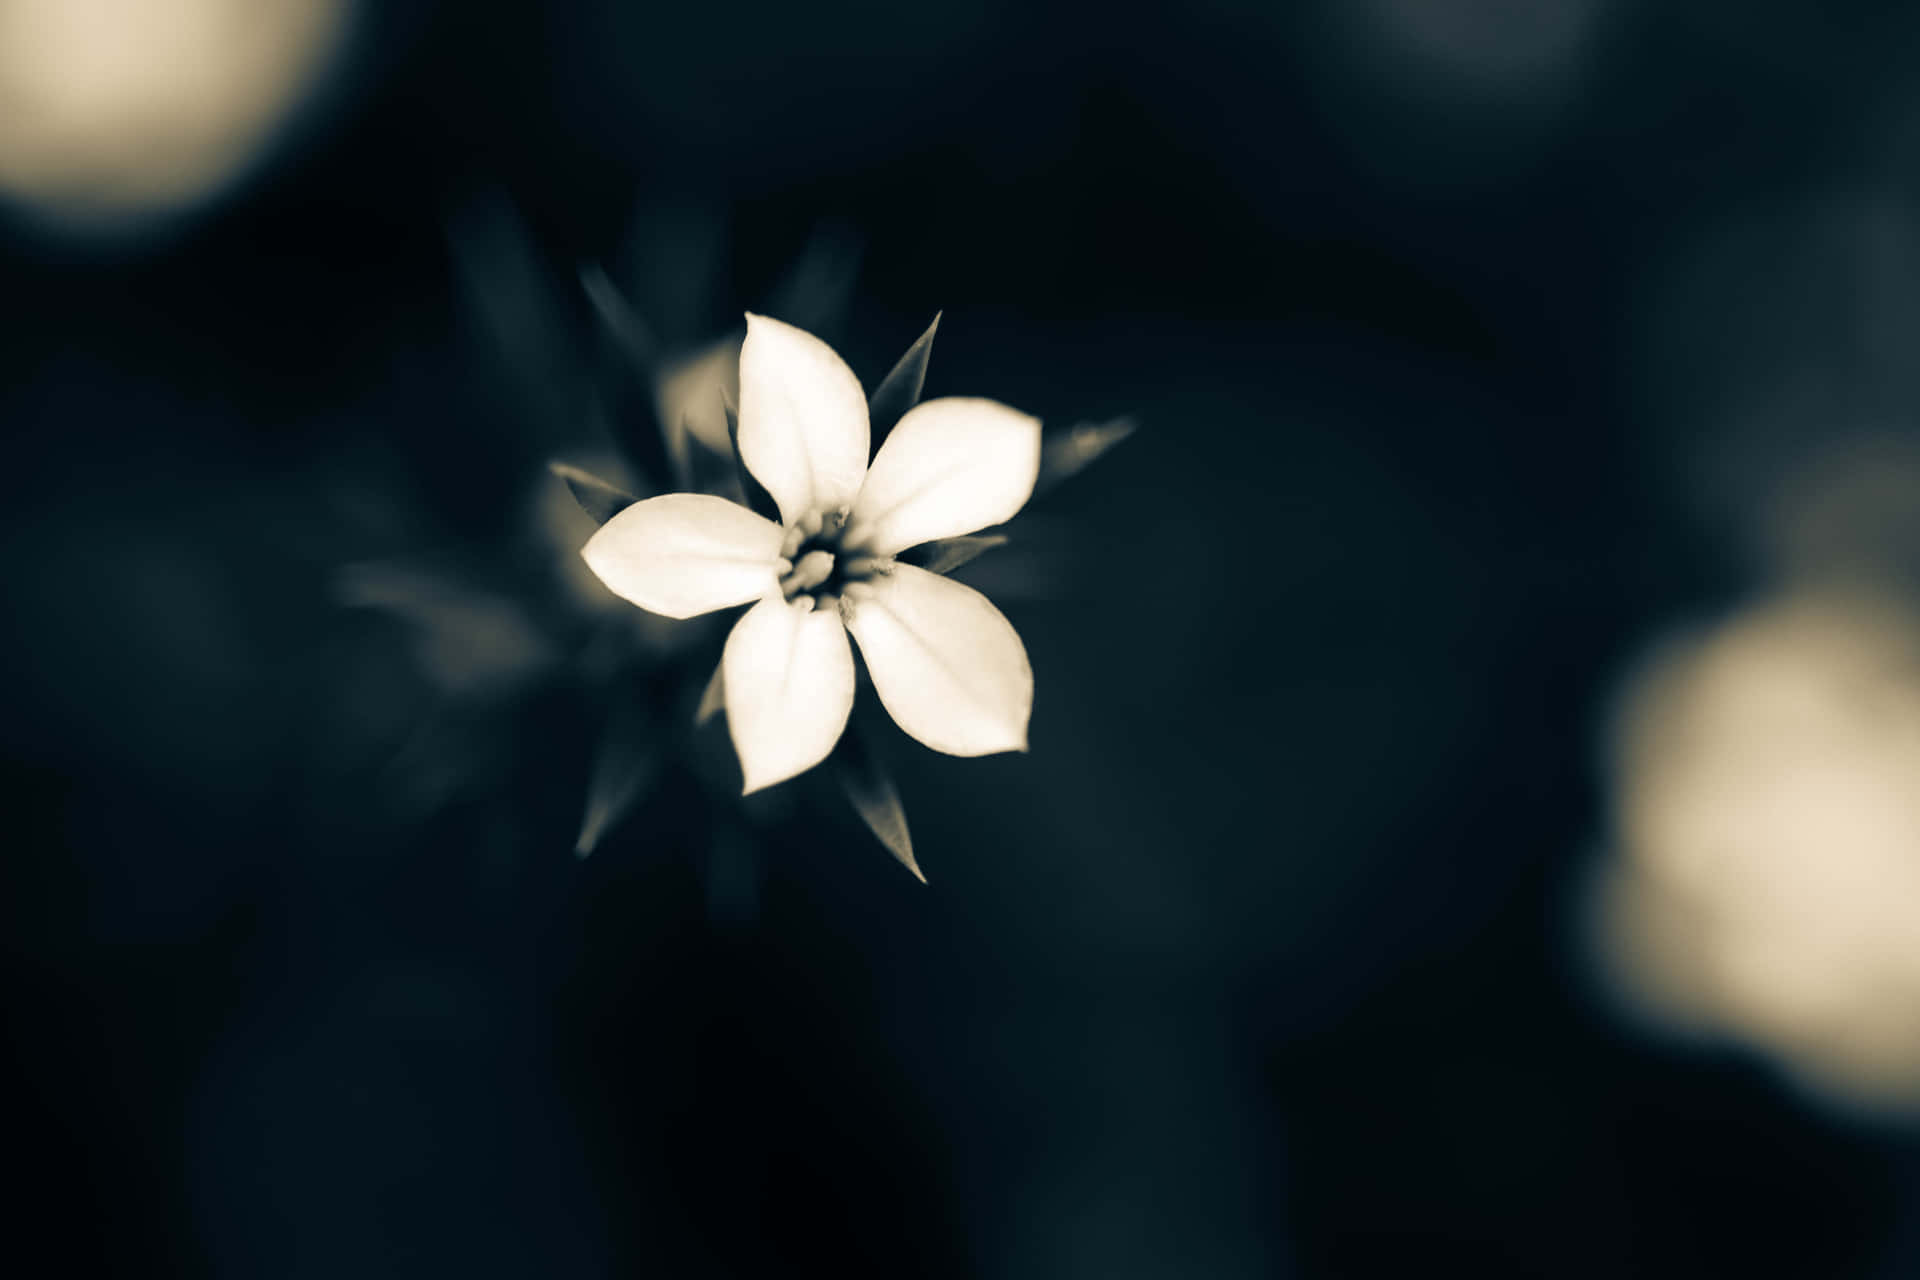 Monochrome Elegance Flower Photography Wallpaper